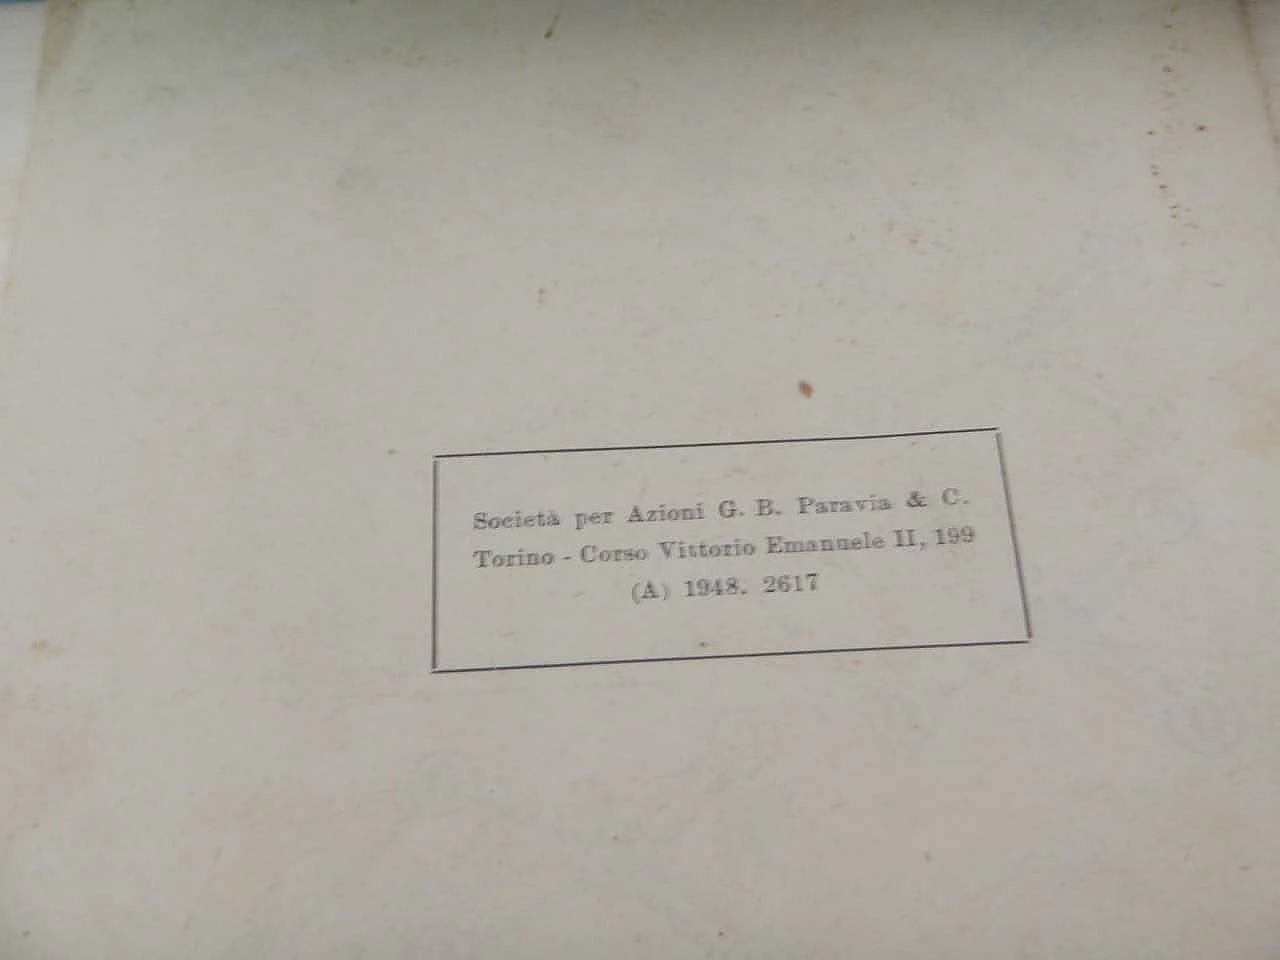 Formulator chemical nomenclature box for Paravia, 1948 12